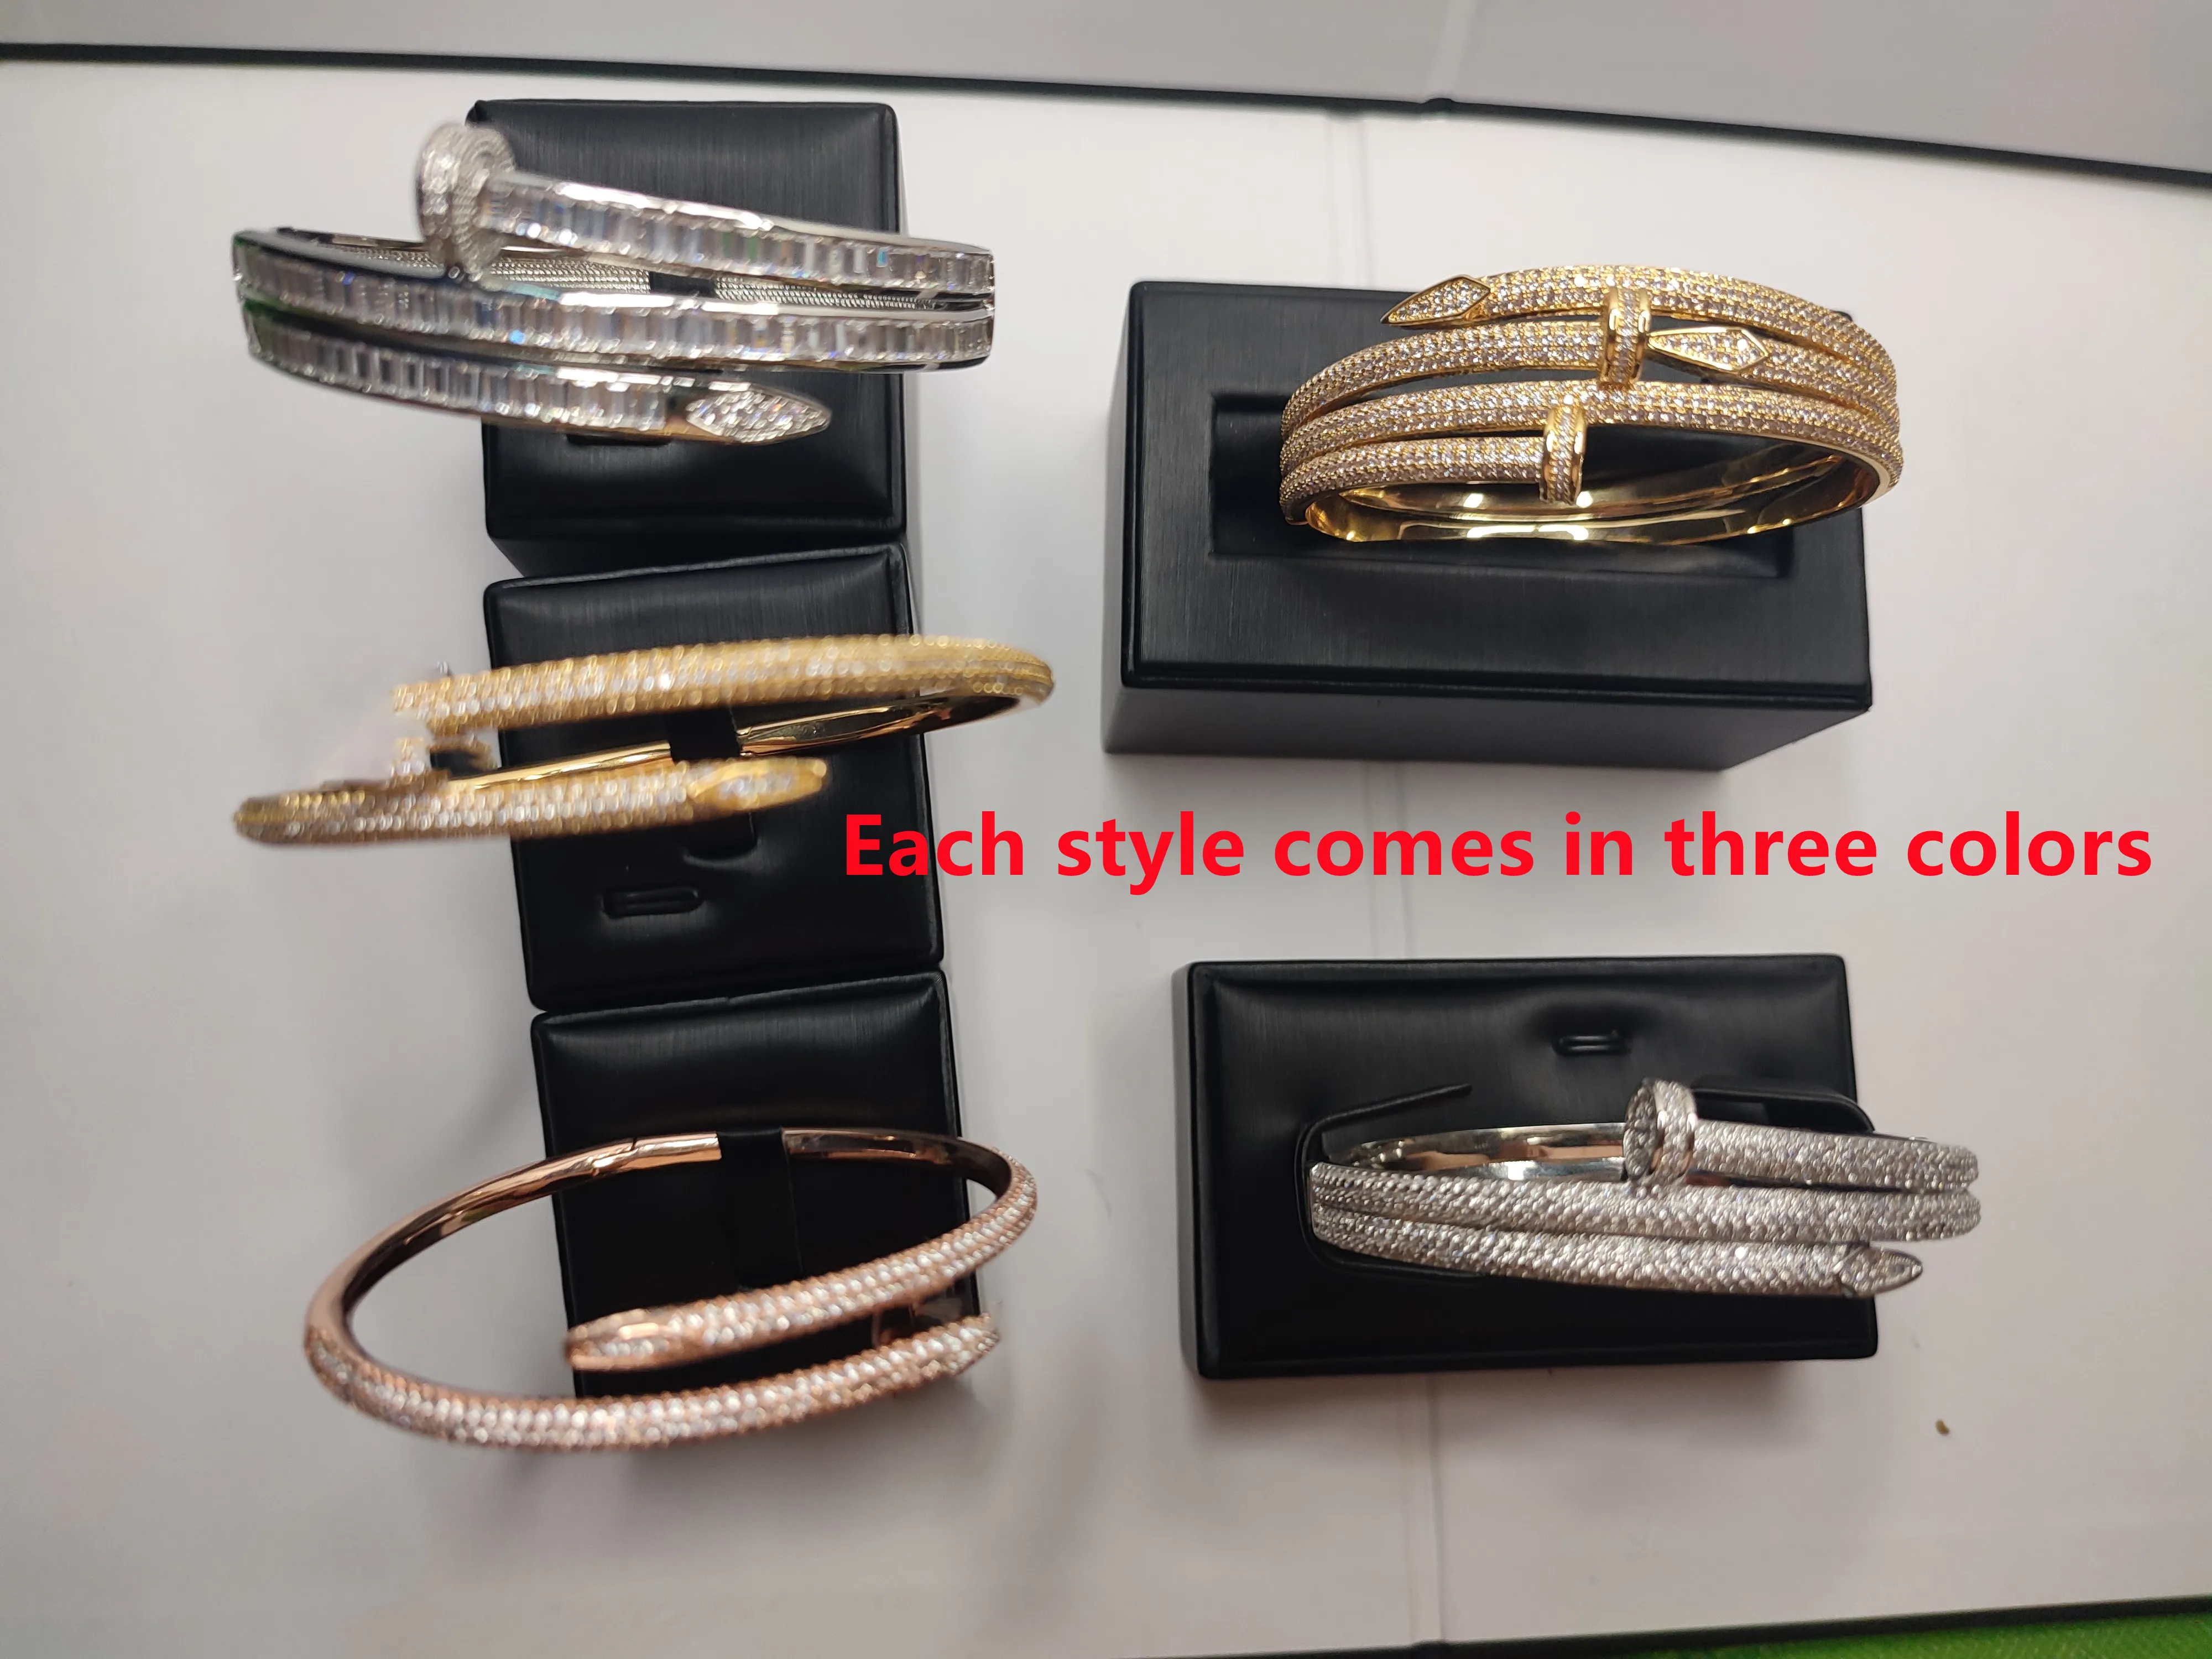 Dainty Design Best Quality Silver & Rose Gold Color Bracelet For Men - Style  C120 at Rs 1100.00 | मेंस ब्रेसलेट - Soni Fashion, Rajkot | ID: 27298445791